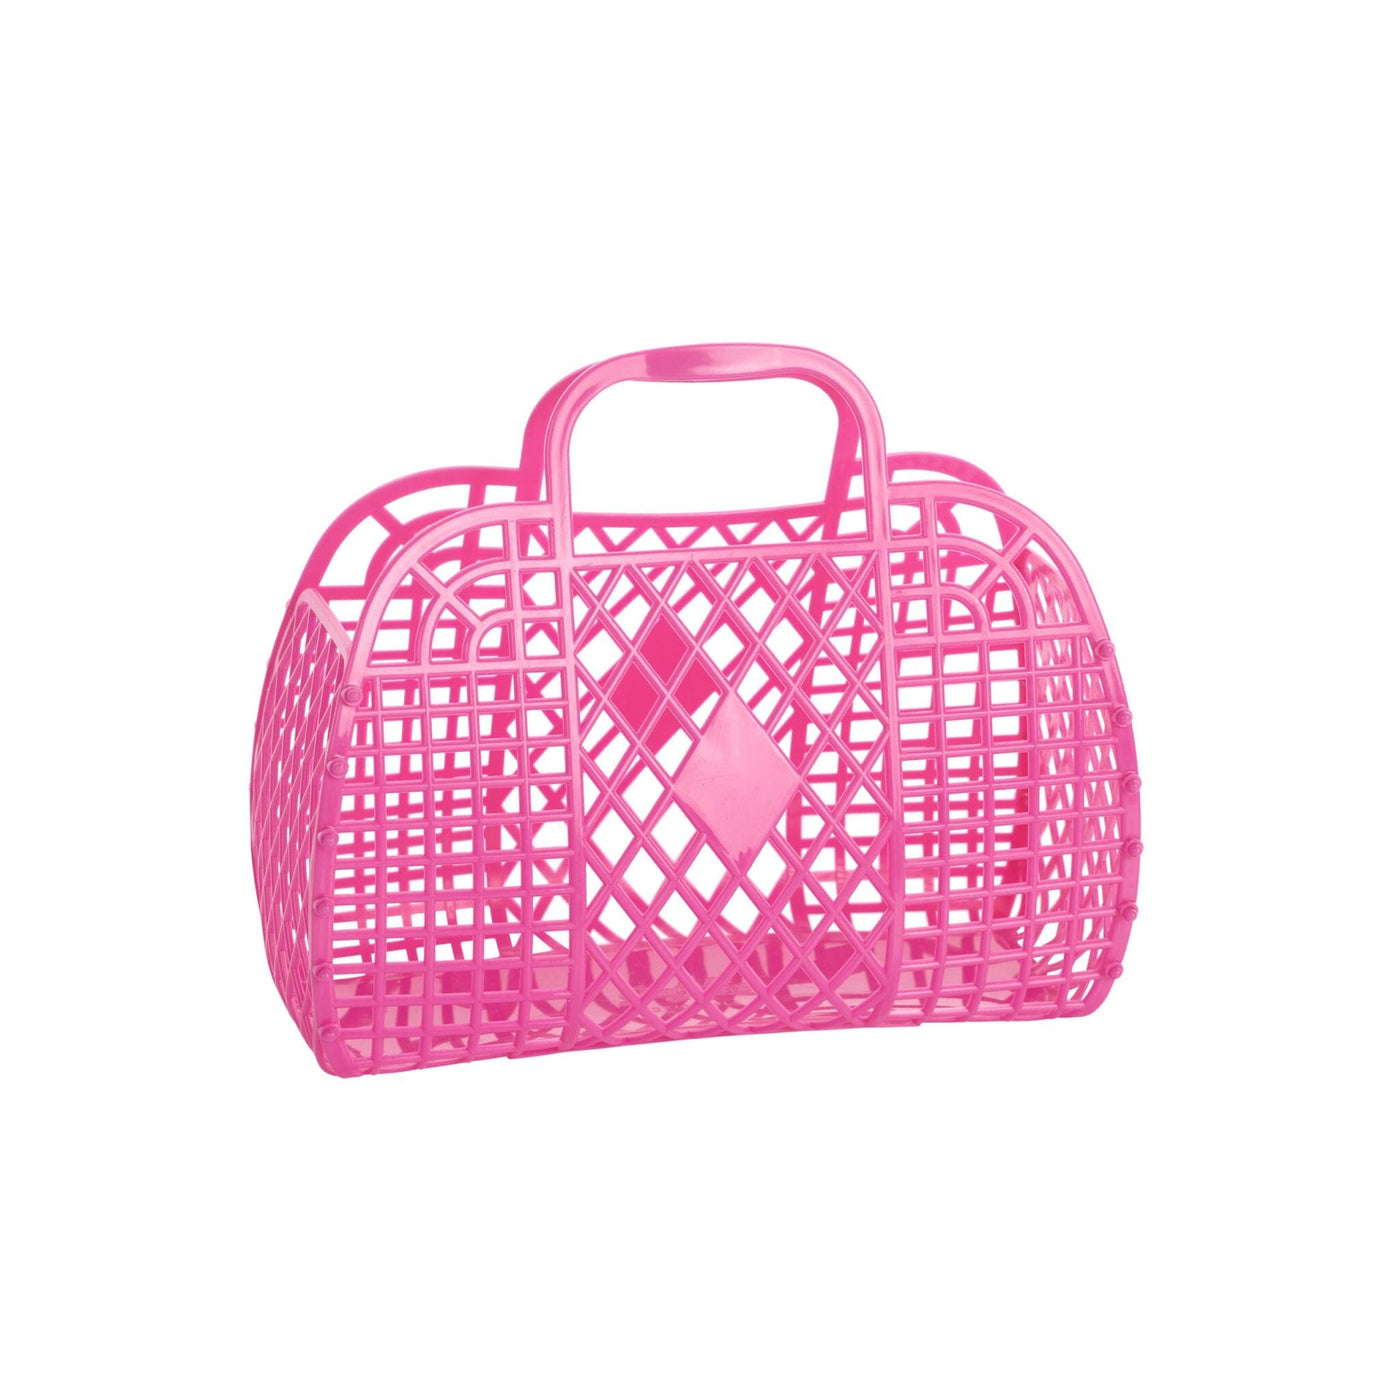 Retro Basket Small - Berry Pink Basket Sun Jellies 